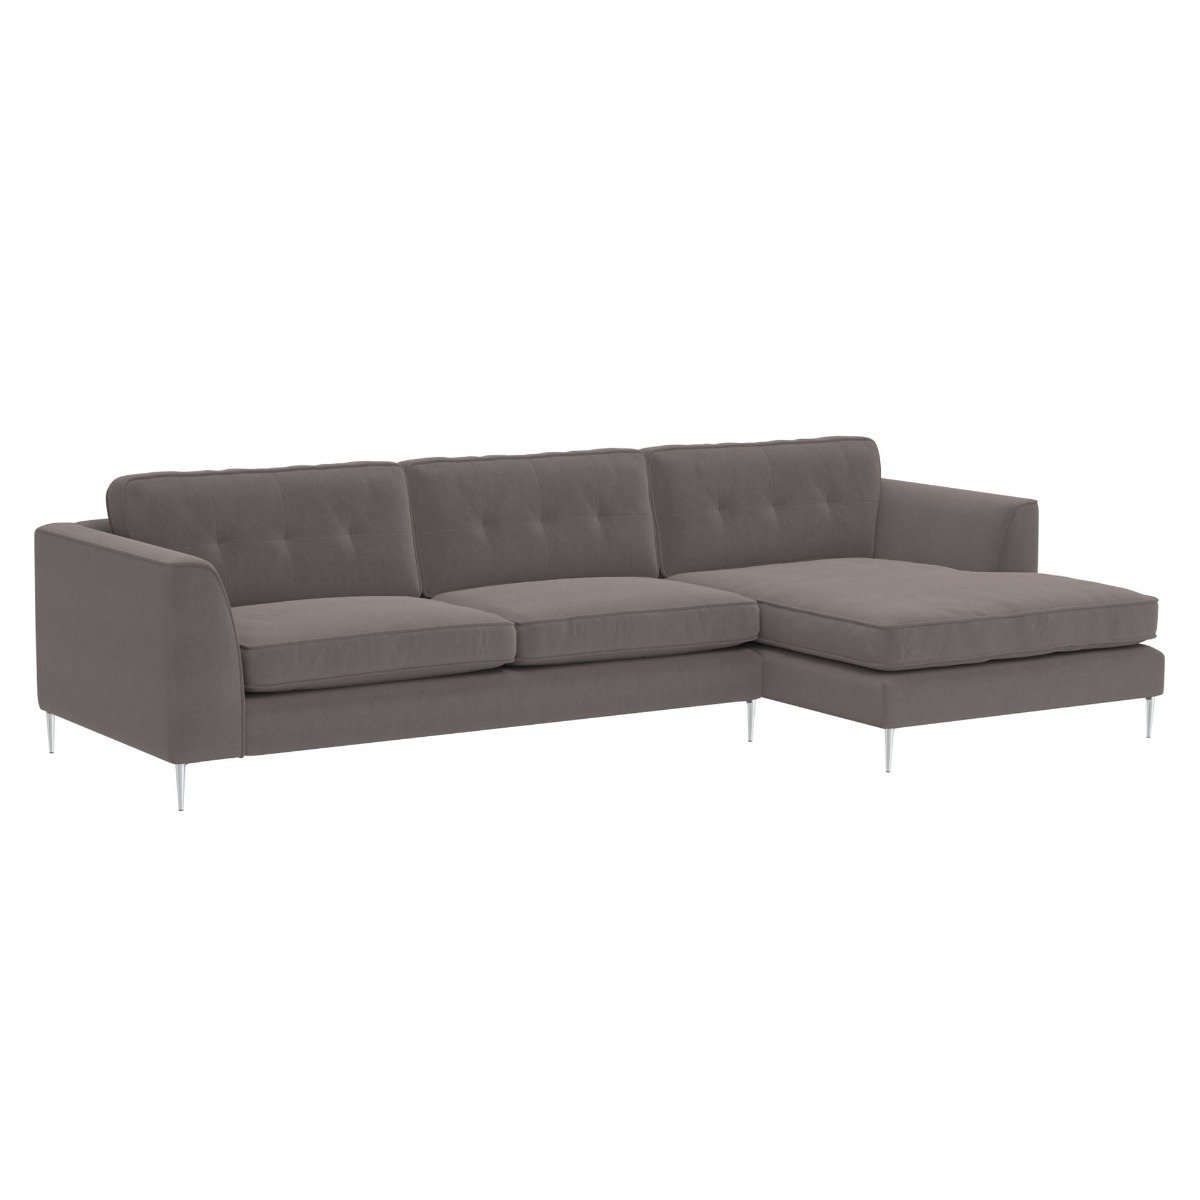 Conza Large Chaise Corner Sofa Right, Grey Fabric | Barker & Stonehouse